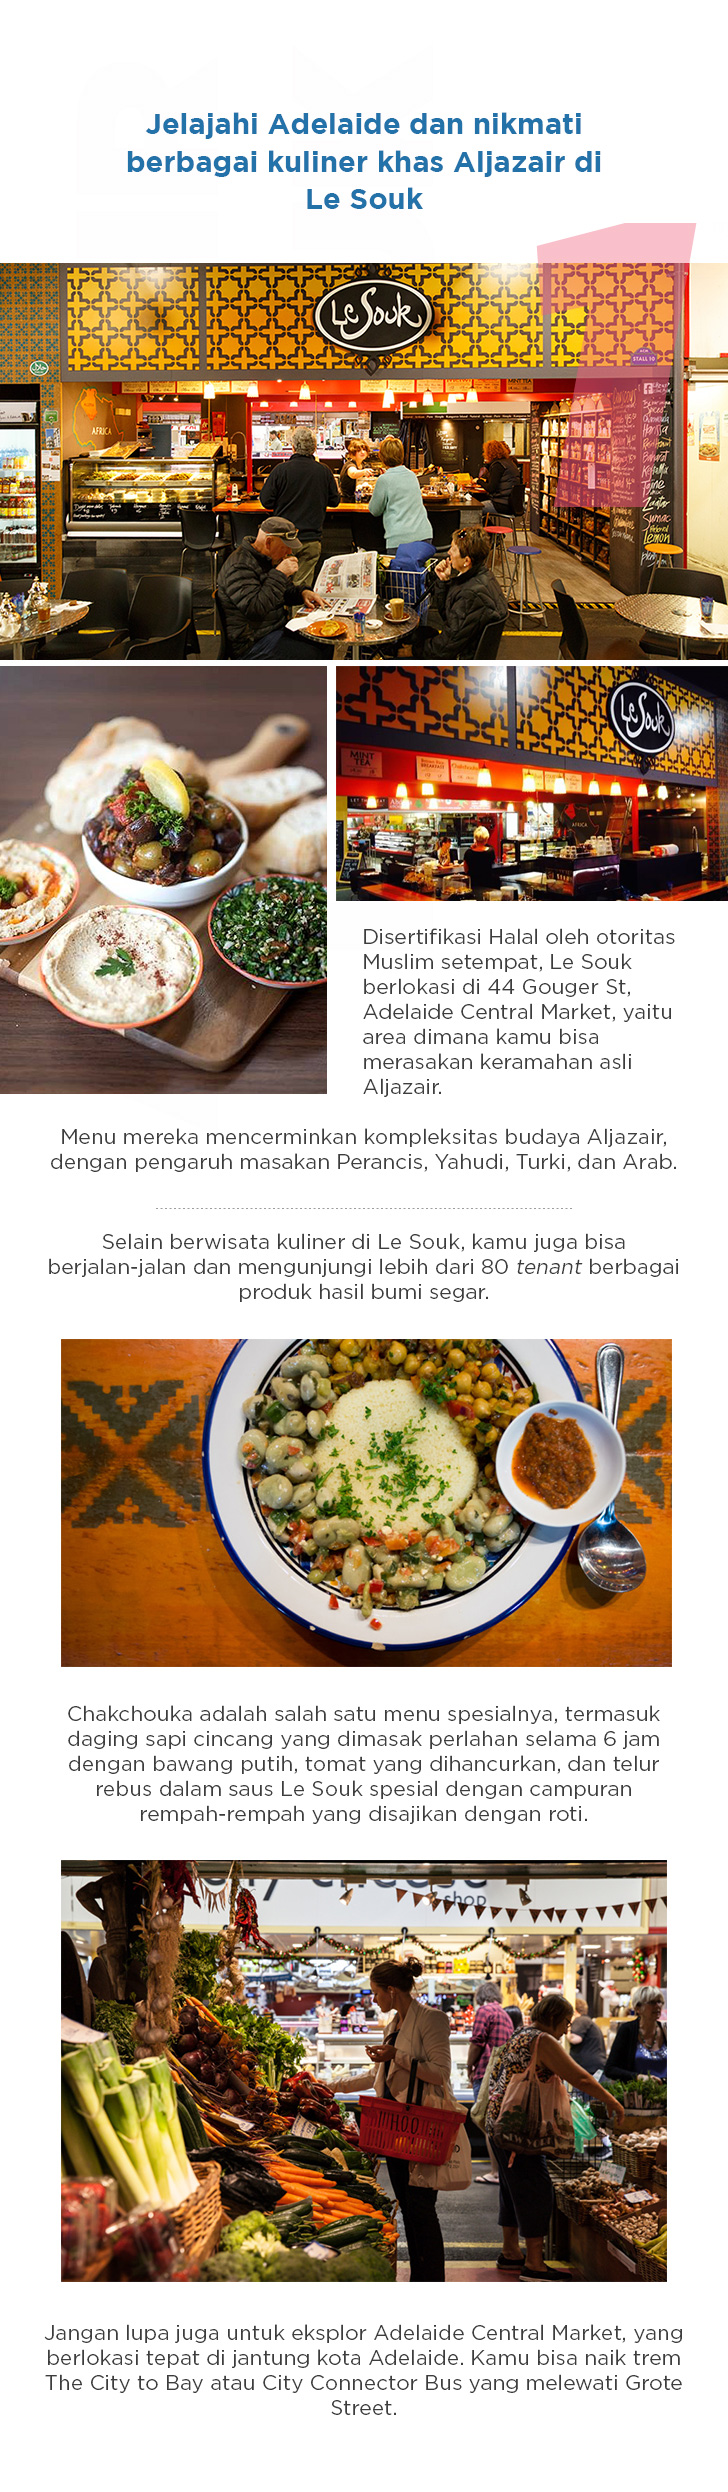 halal, infographic, kuliner, australia